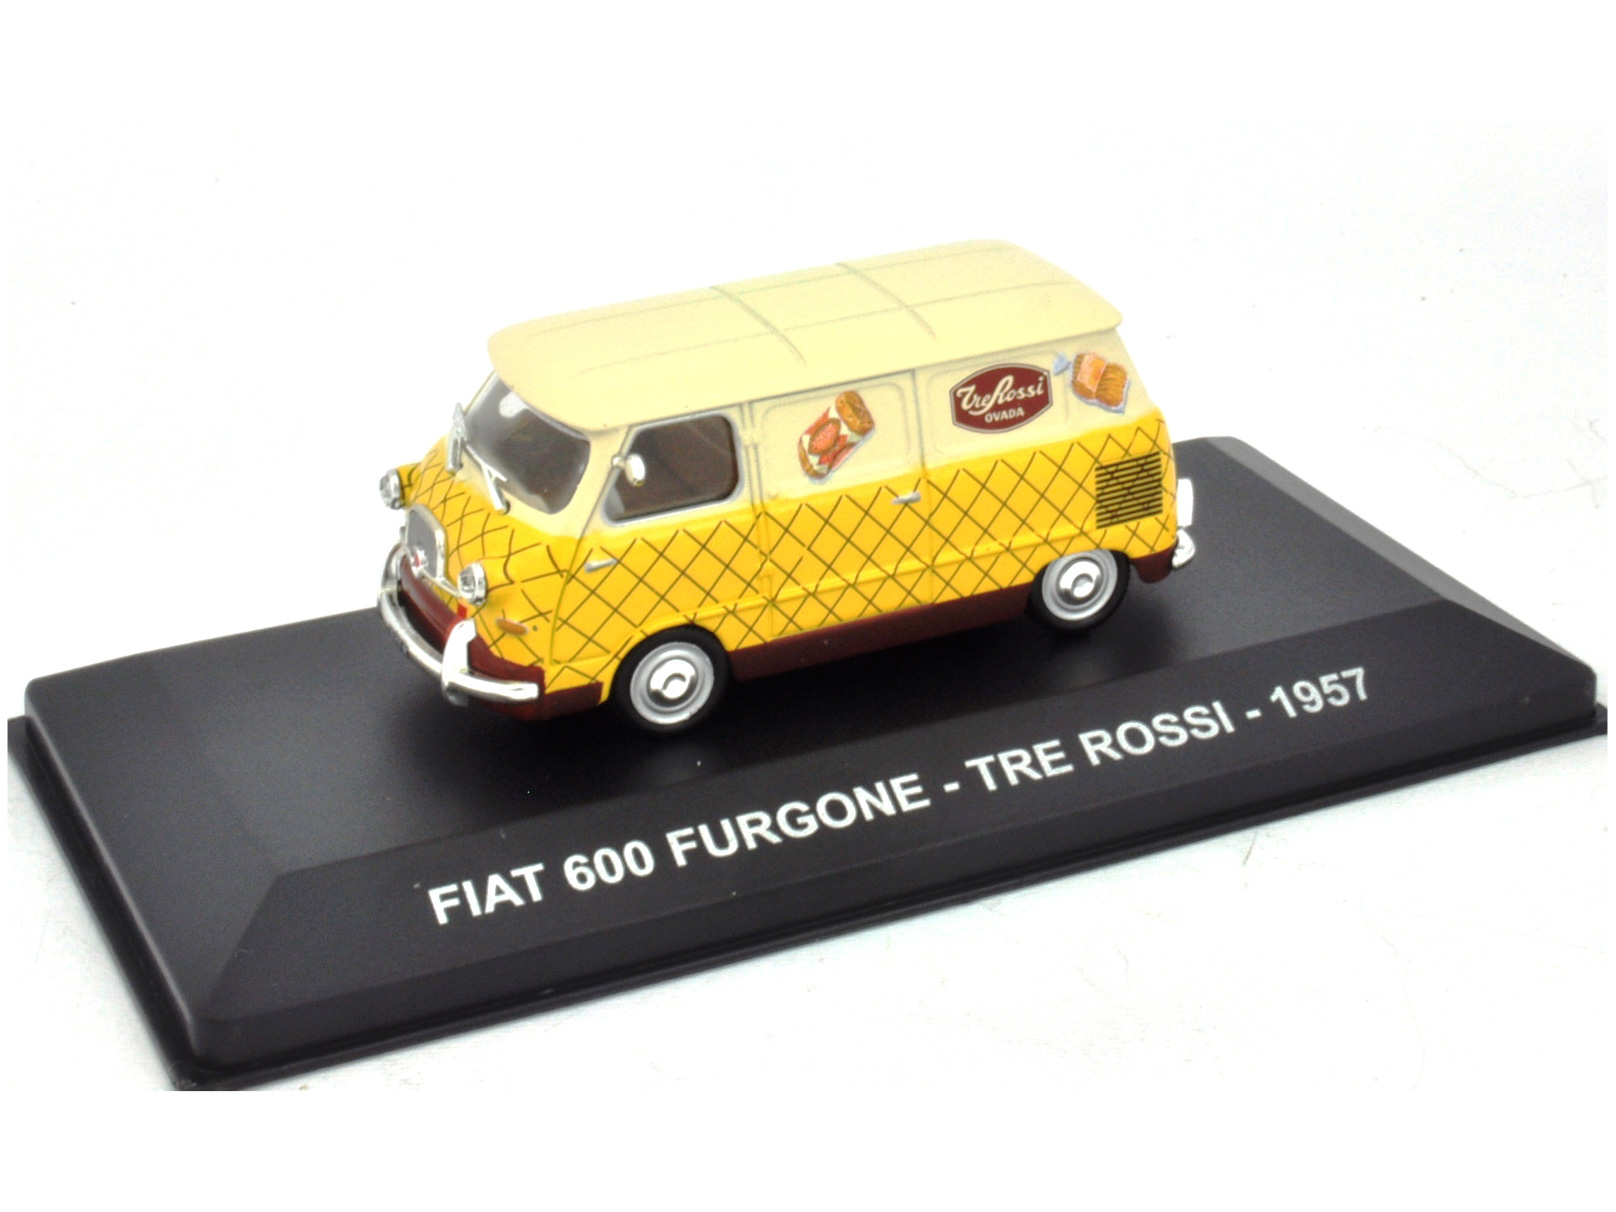 FIAT 600 FURGONE - TRE ROSSI - 1957